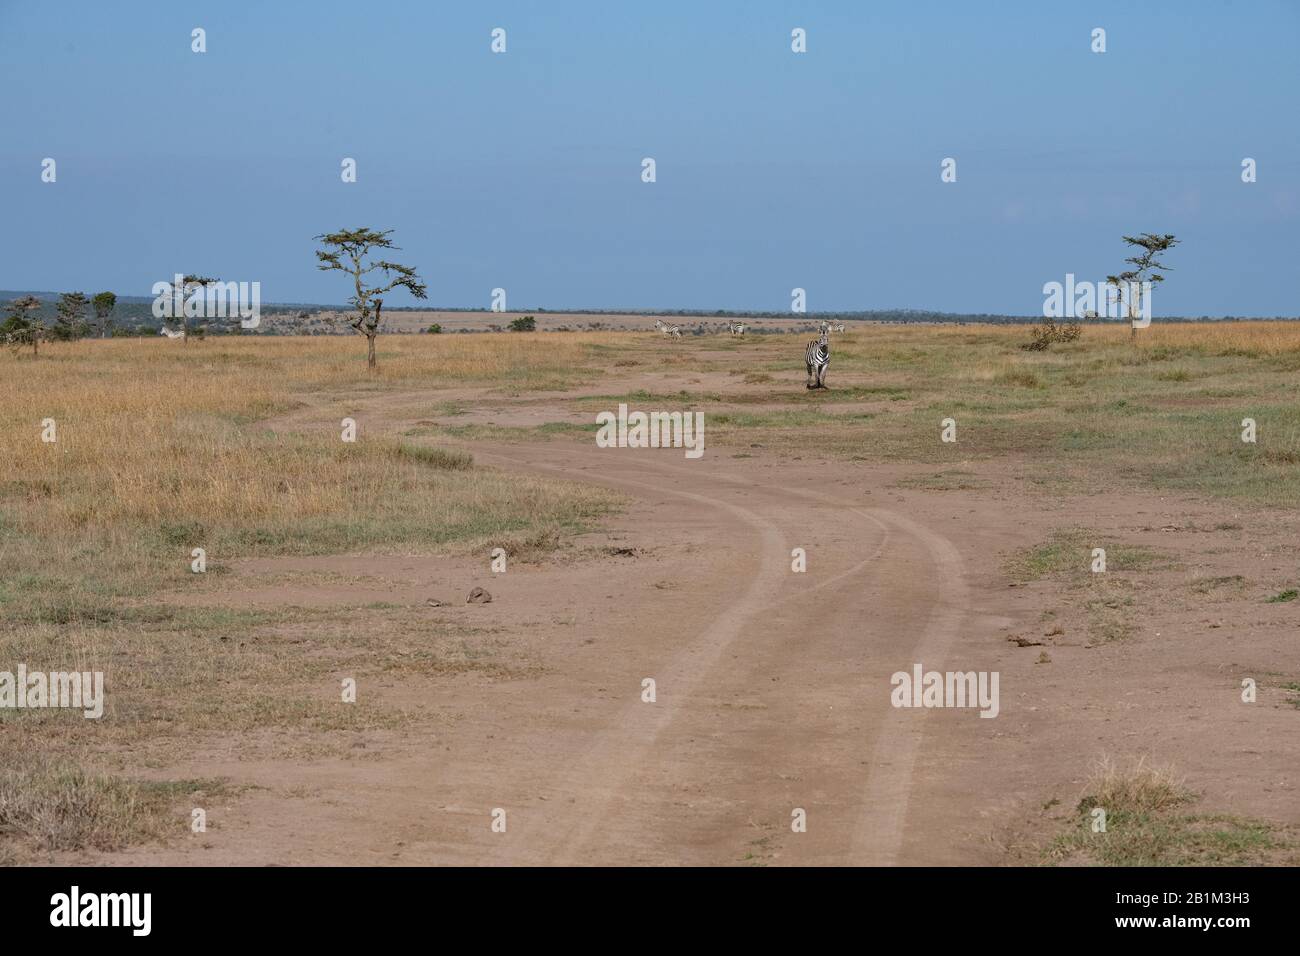 dusty road used by safari vehicles leading off into landscape of the Masai Mara, Kenya Stock Photo